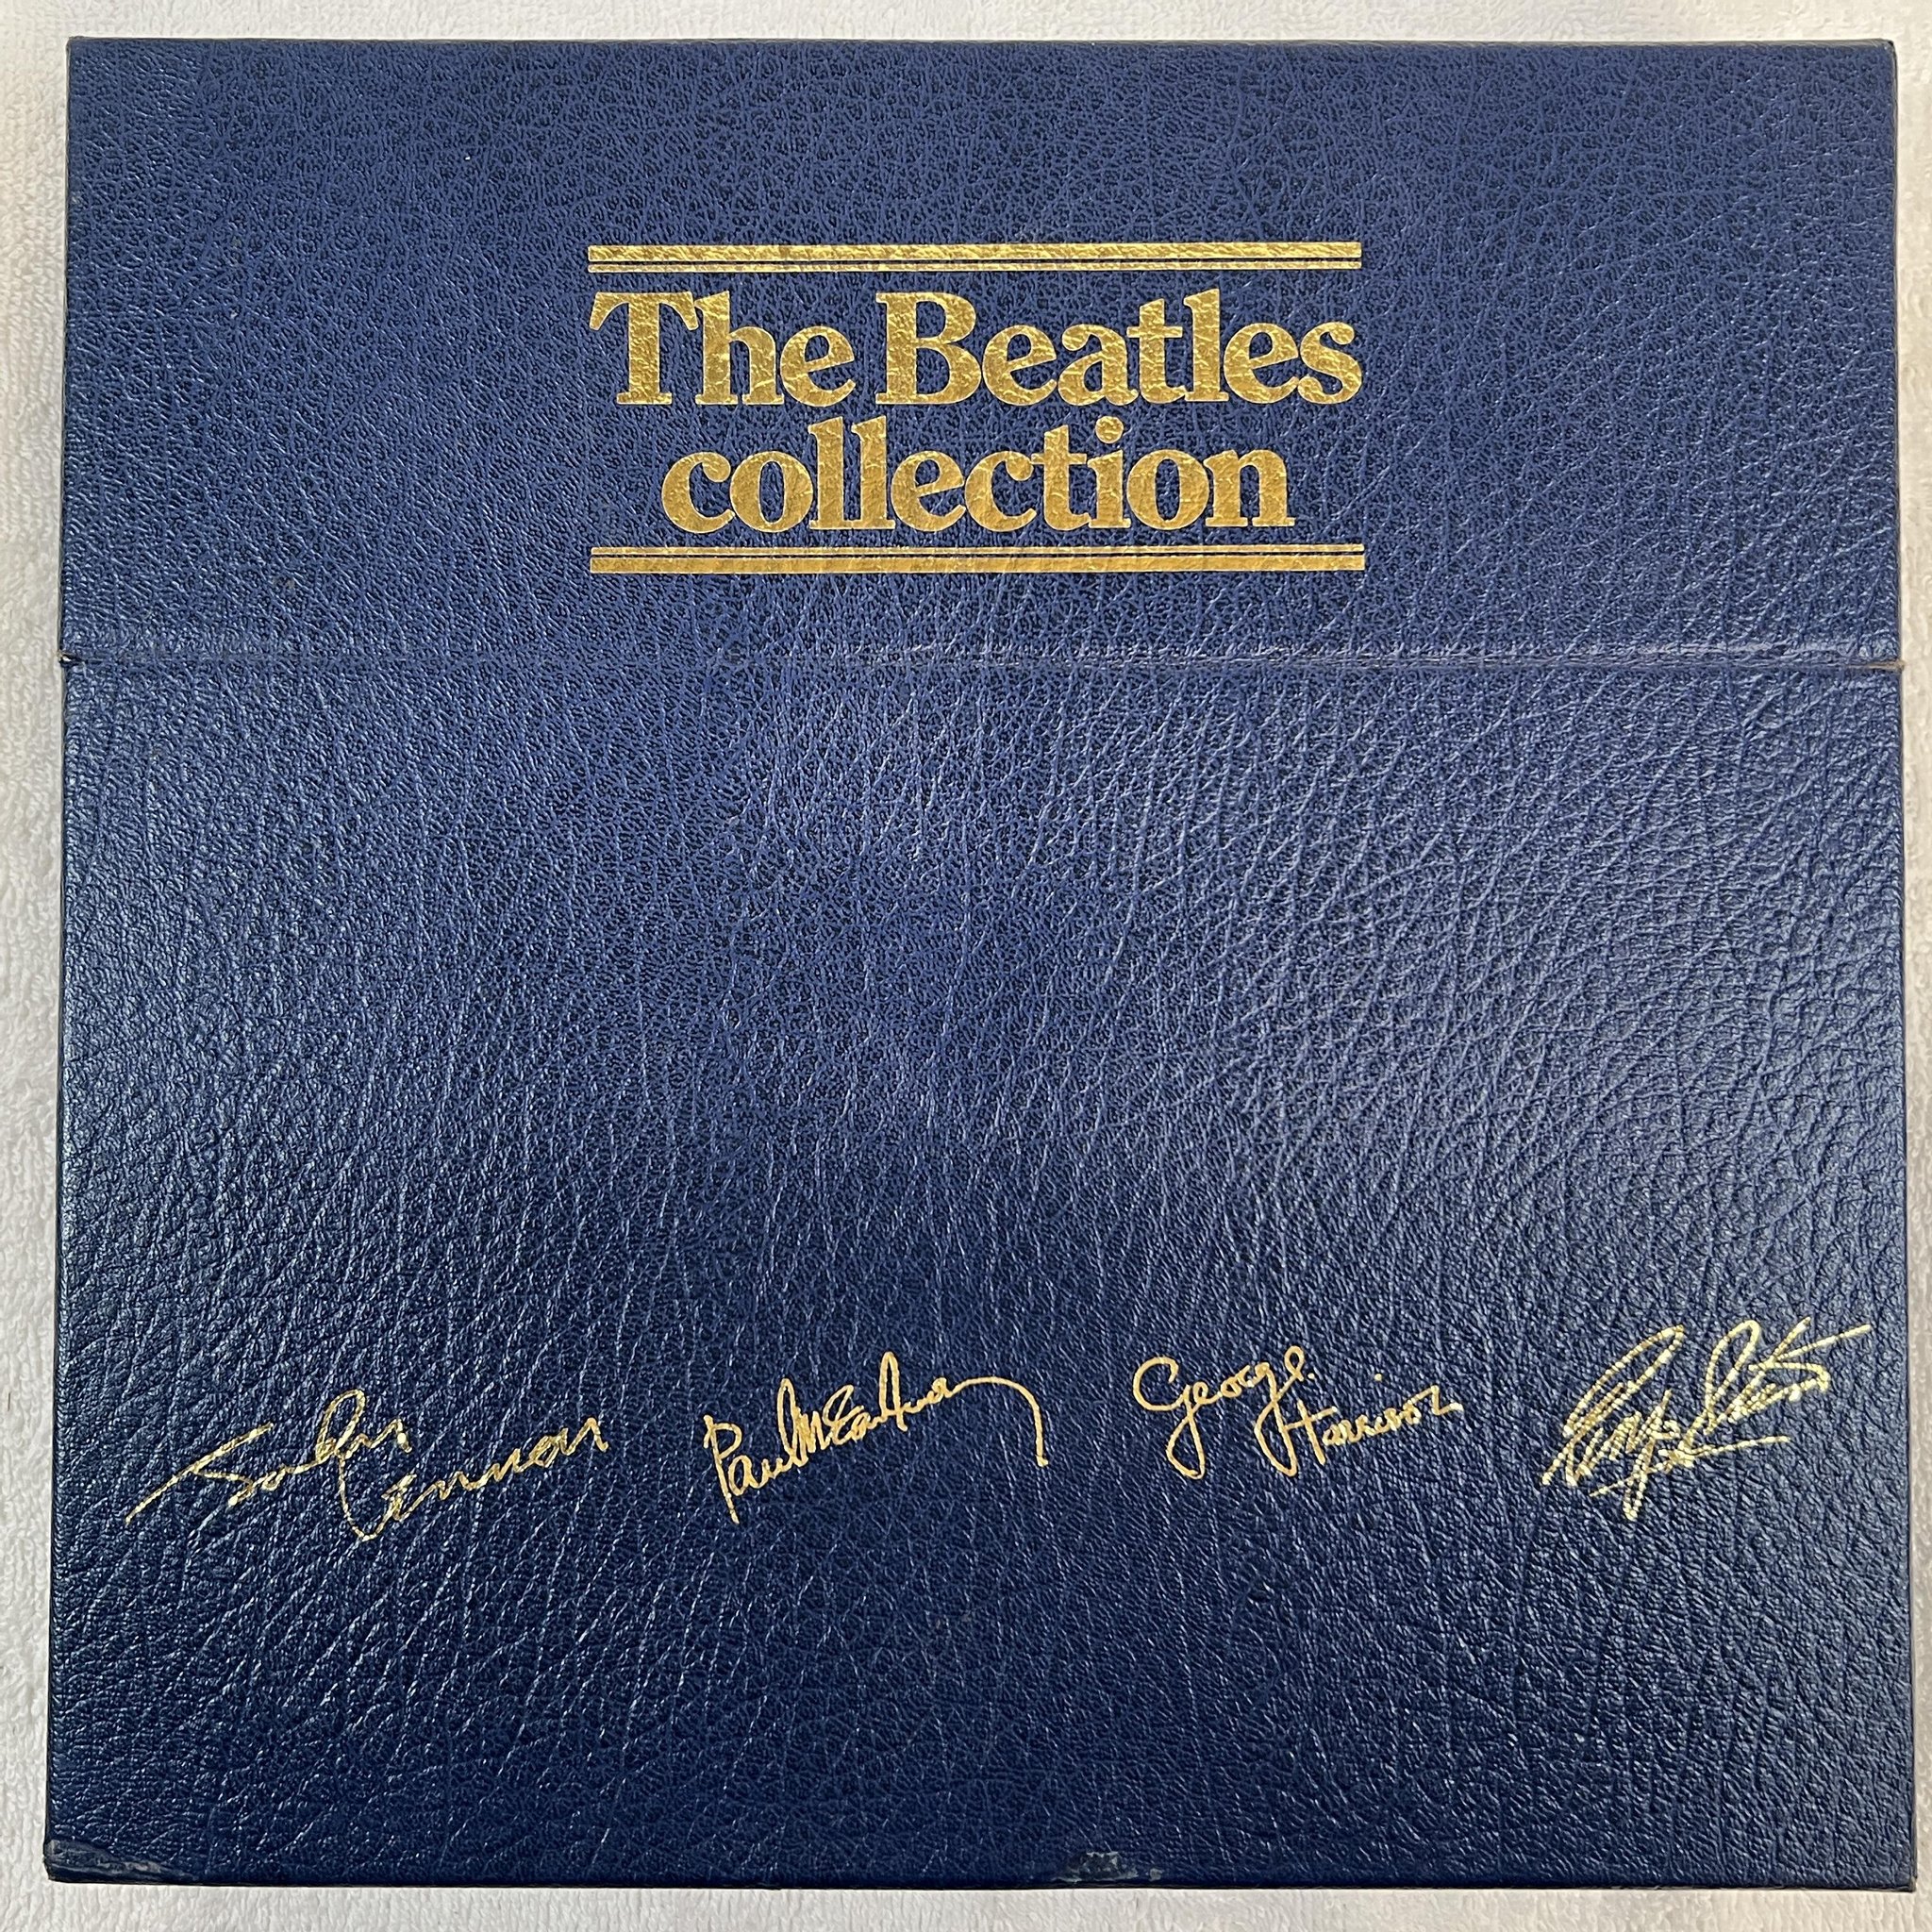 Omslagsbild för skivan THE BEATLES Collection LP box set See -78 PARLOPHONE BC 13 0C 162-53163/53176